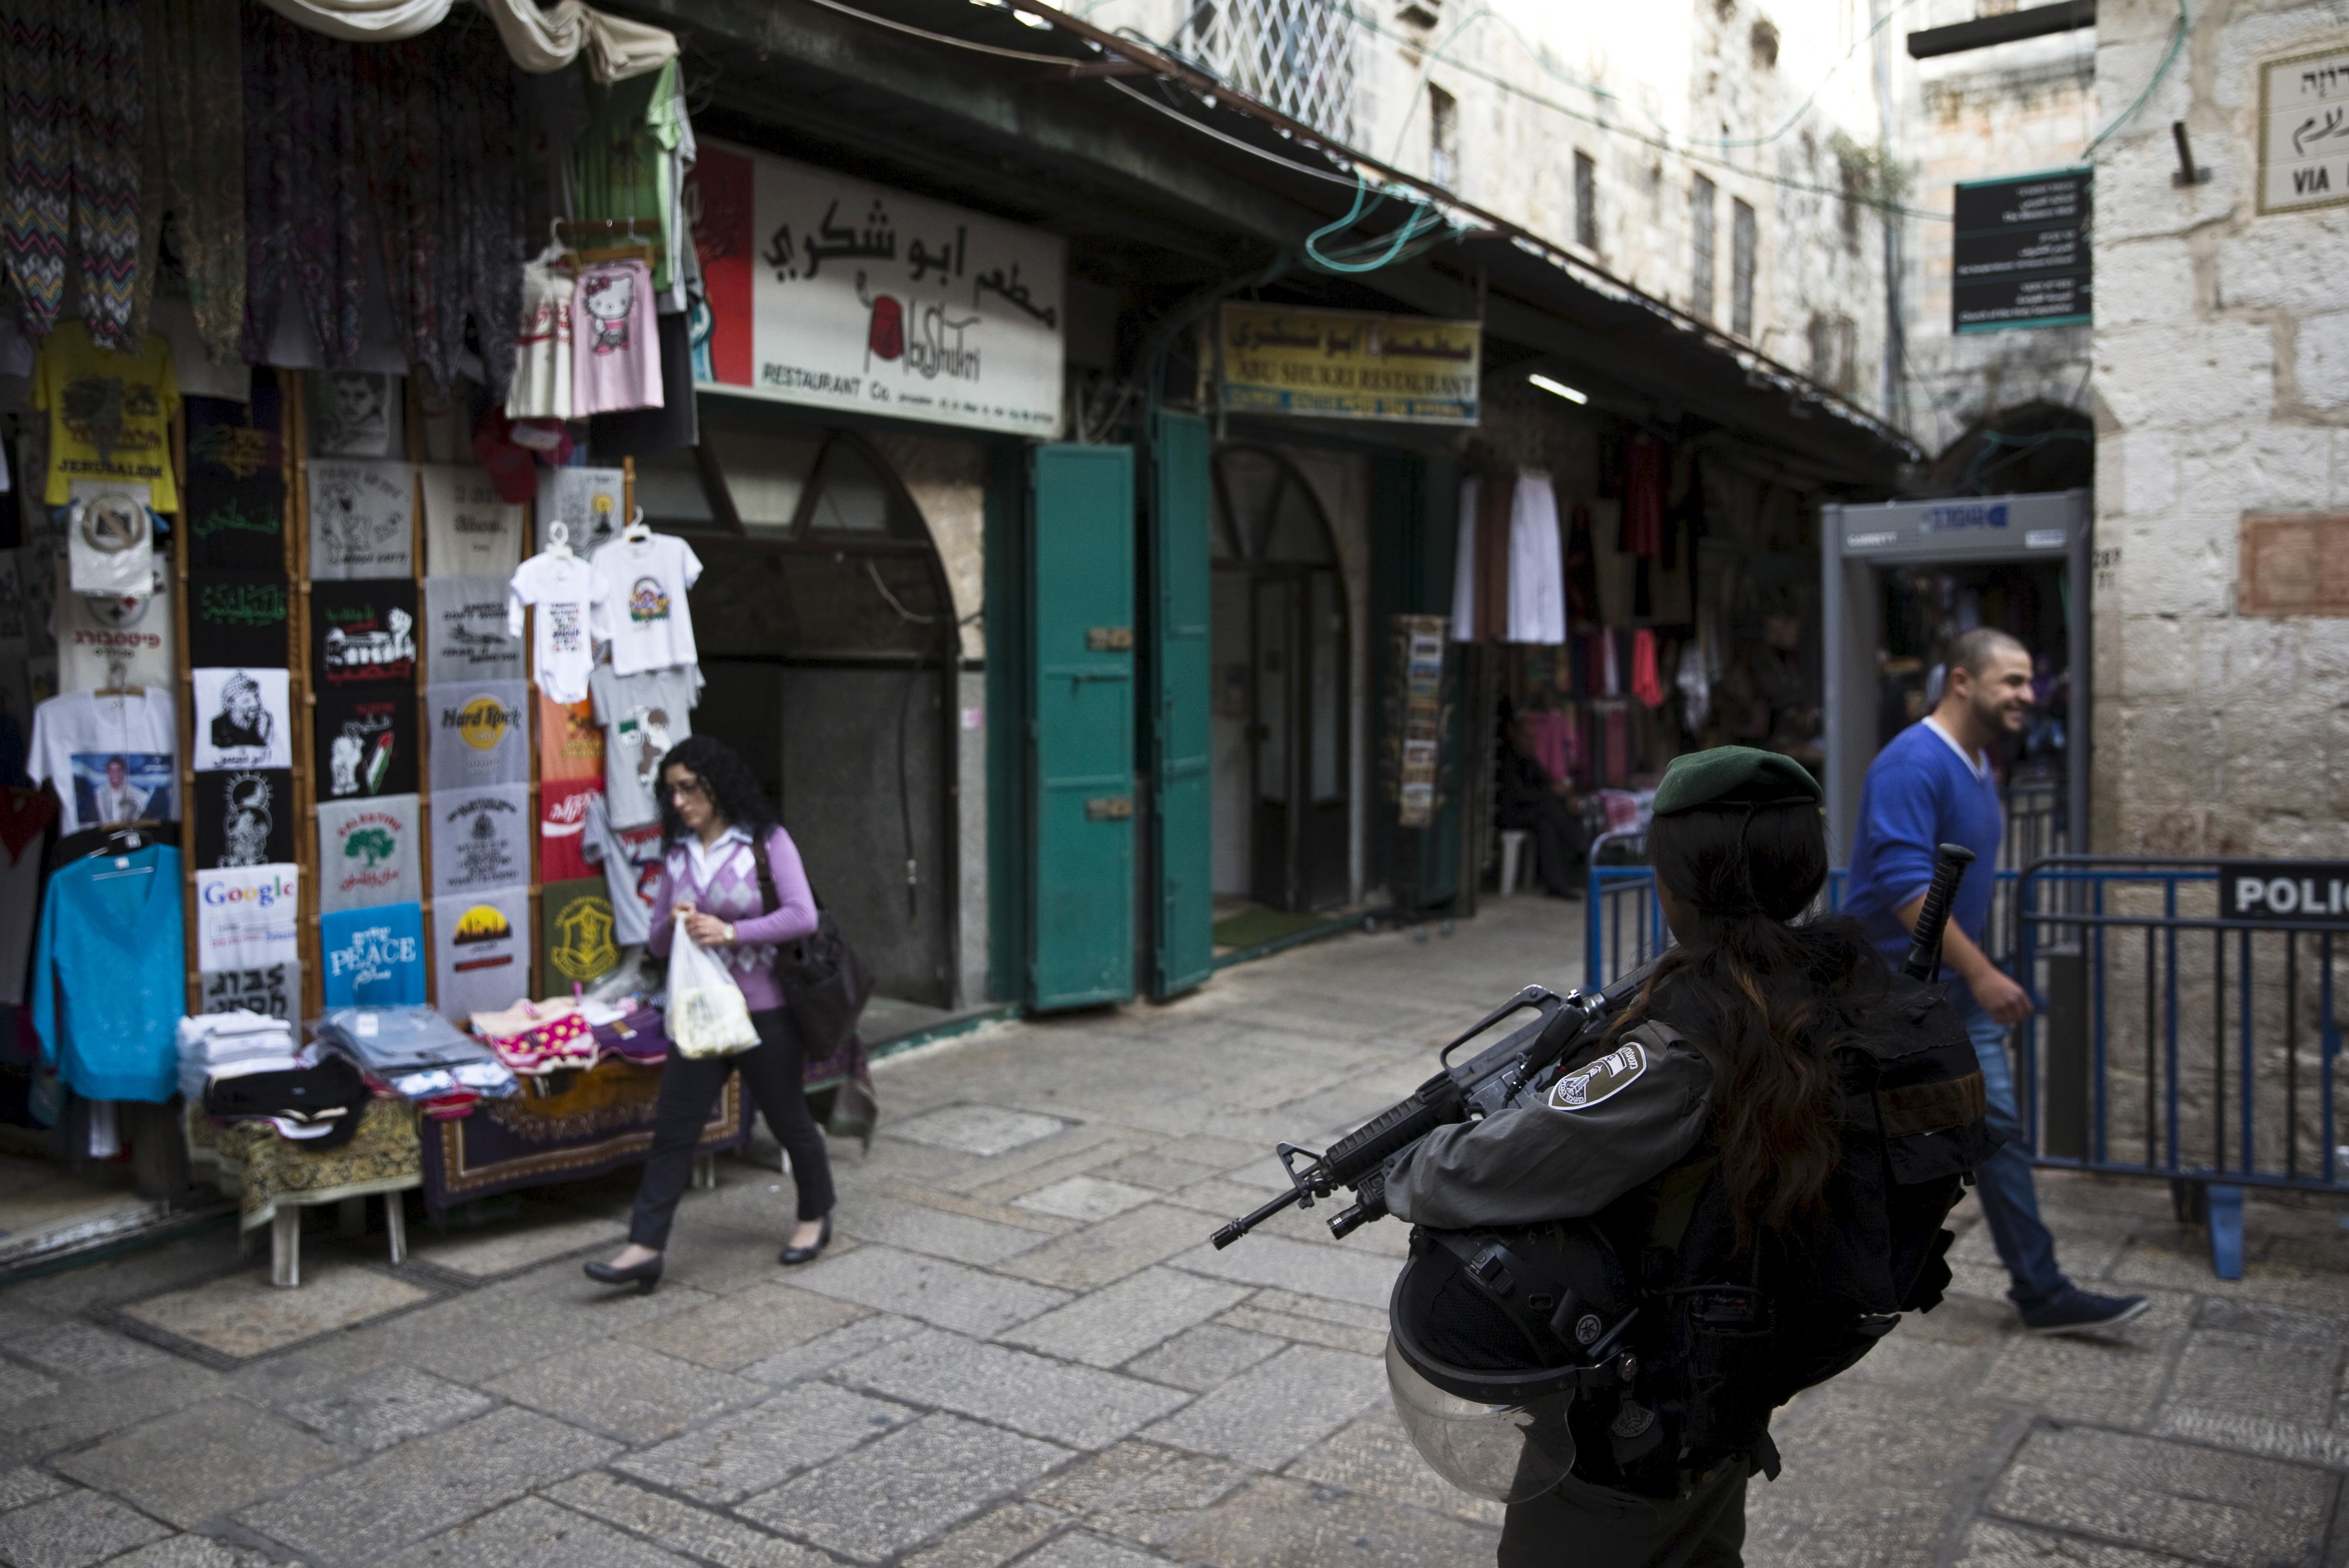 An Israeli border policewoman stands guard near Abu Shukri's hummus restaurant in Jerusalem's Old Ci